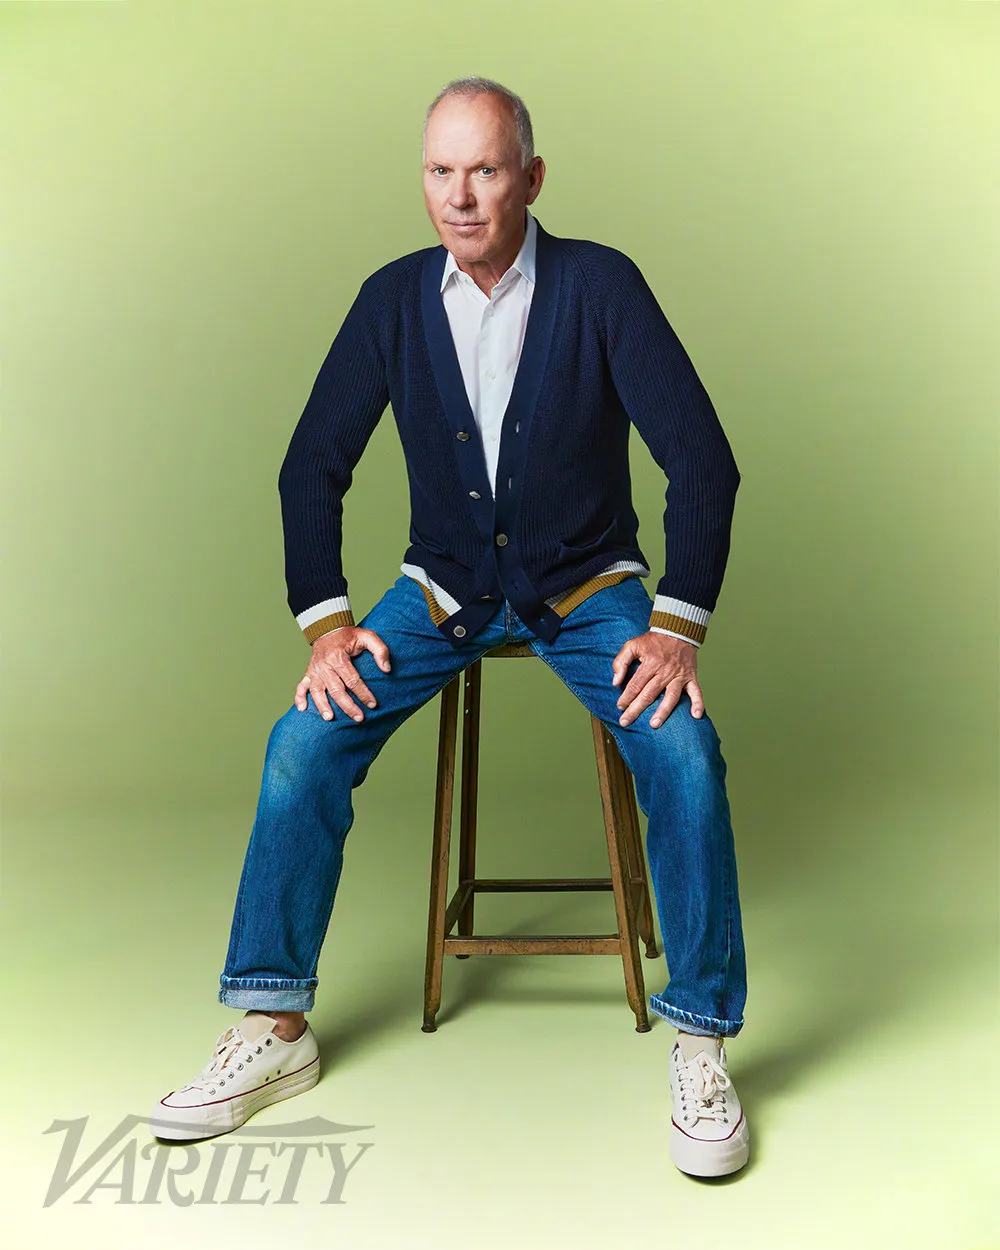 Michael Keaton, 'Variety' magazine Emmy Awards special portrait | FMV6